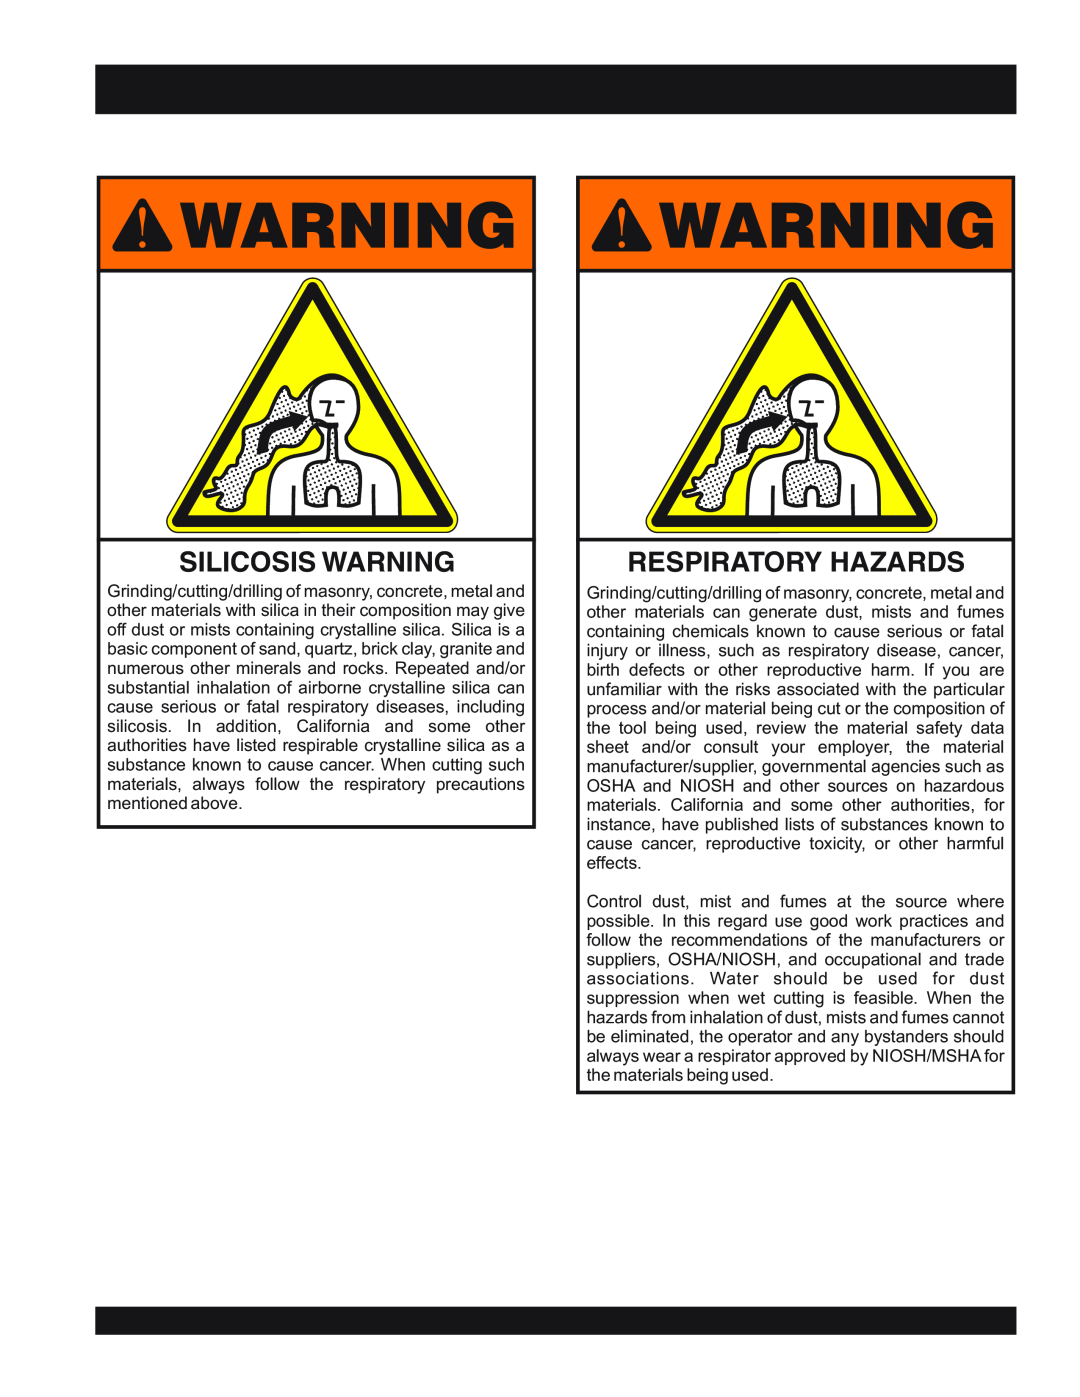 Multiquip CA4HC operation manual Silicosis Warning, Respiratory Hazards 